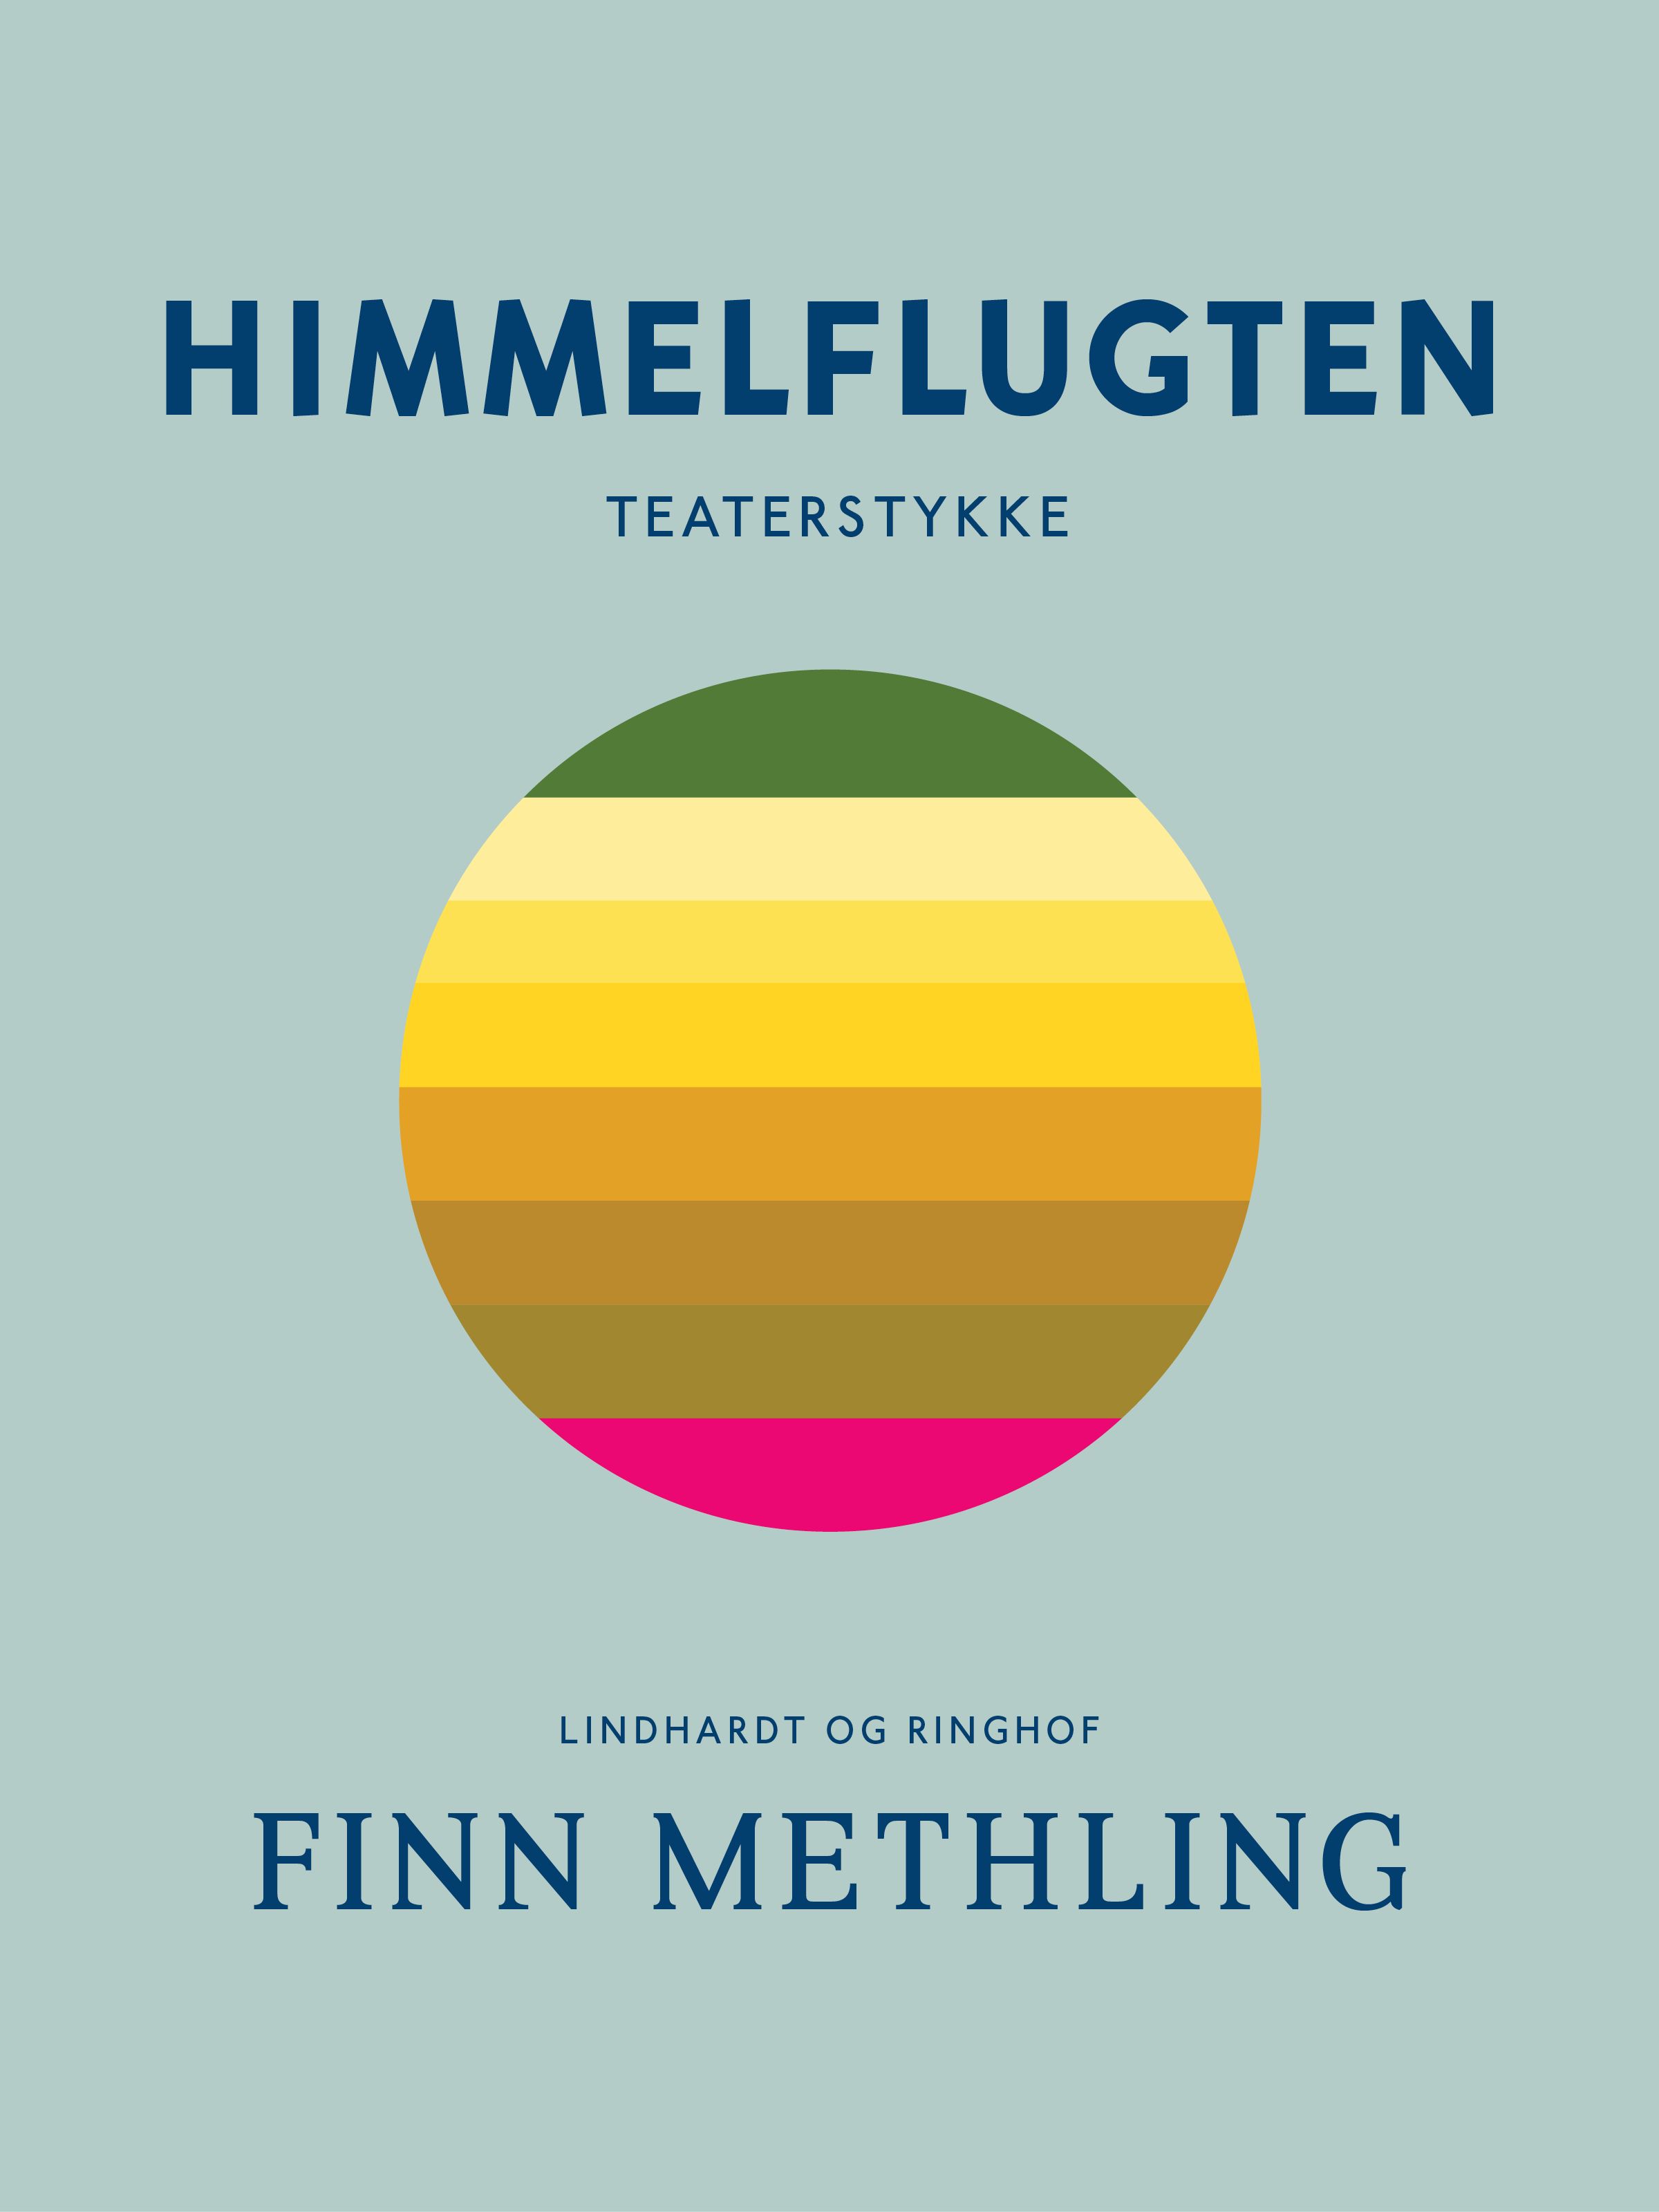 Himmelflugten, eBook by Finn Methling